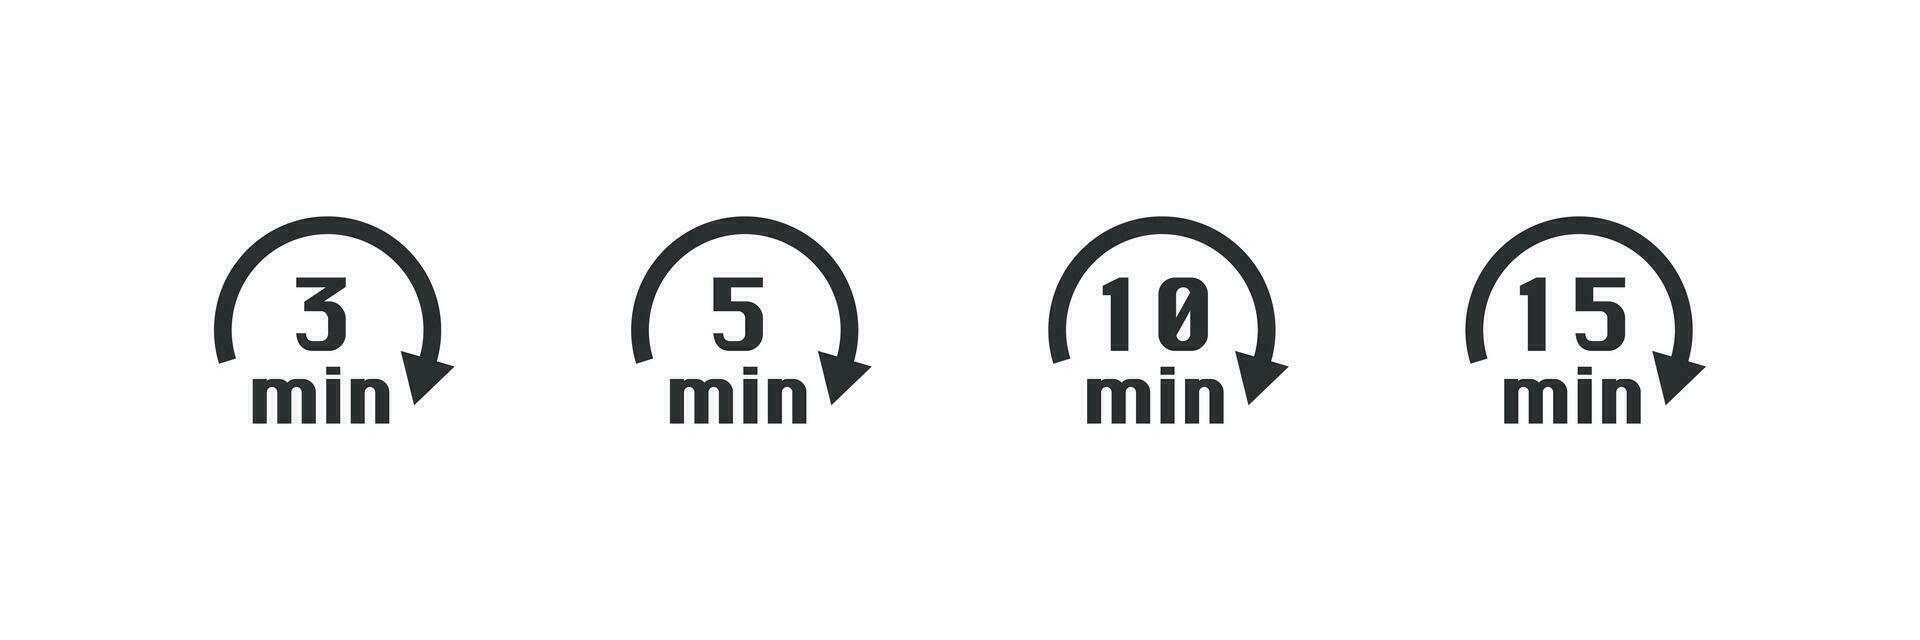 3, 5, 10, 15 minutes information icon. App button vector